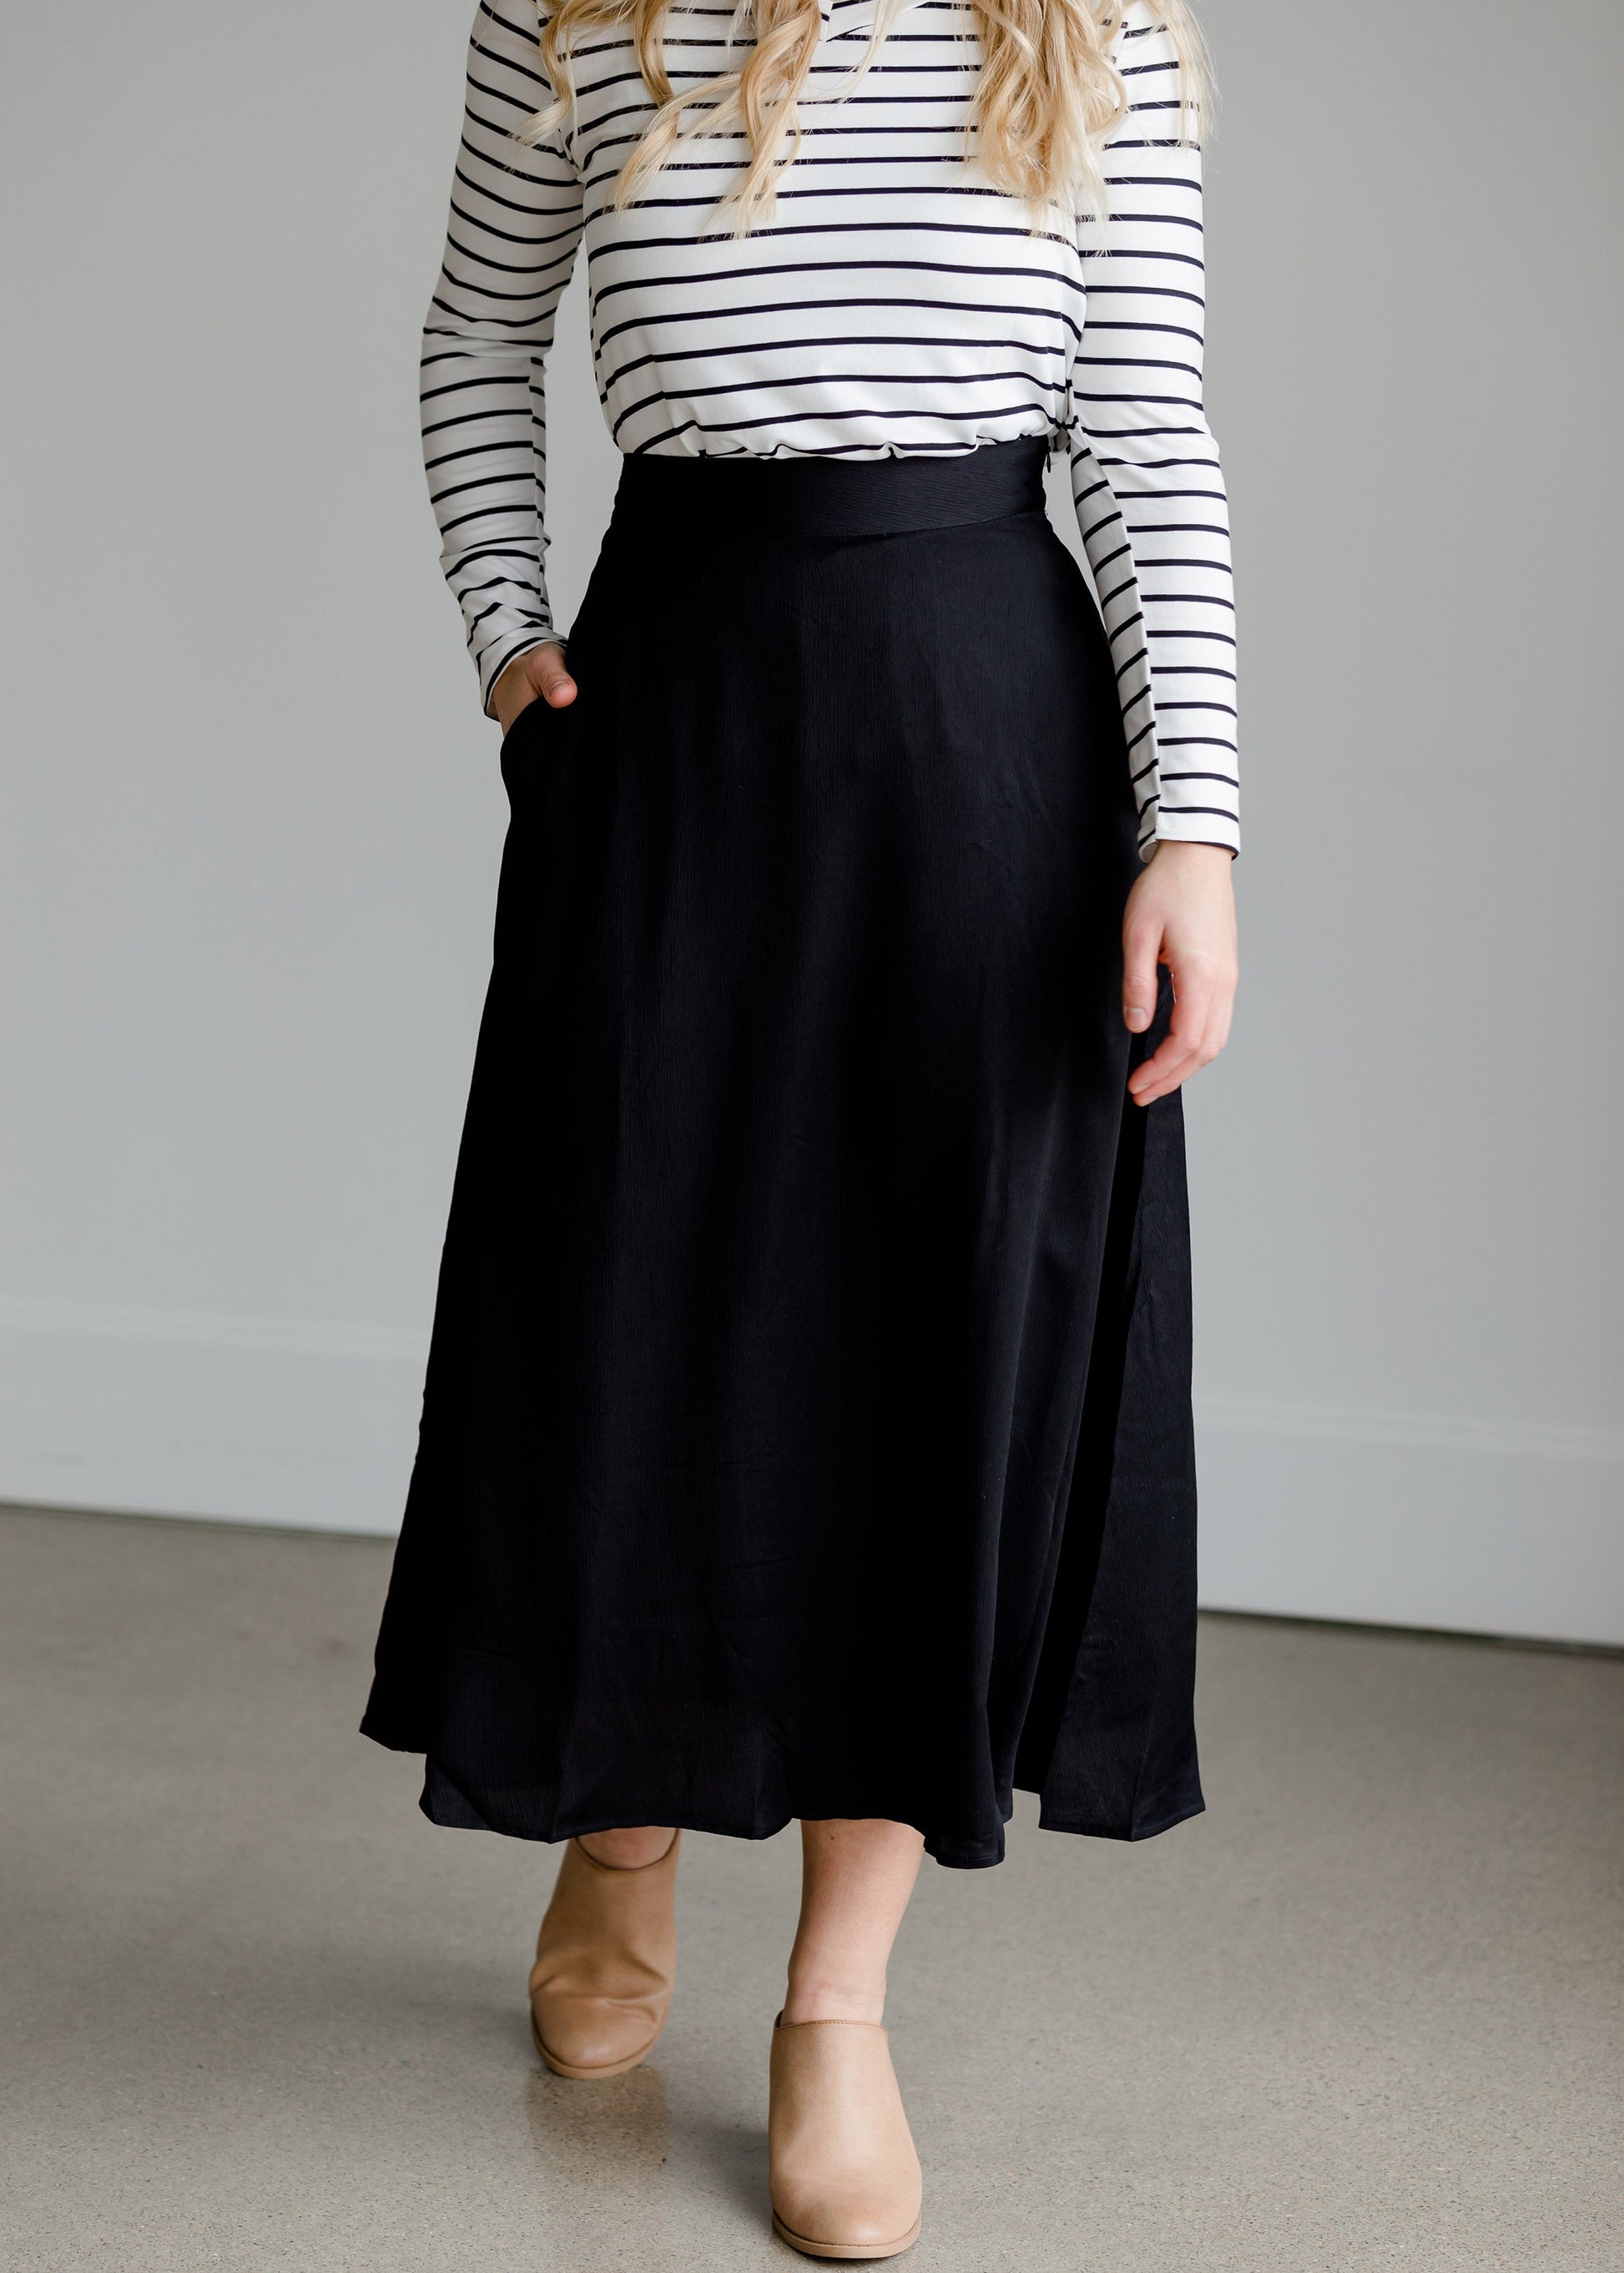 Woven A-Line Black Midi Skirt - FINAL SALE FF Skirts